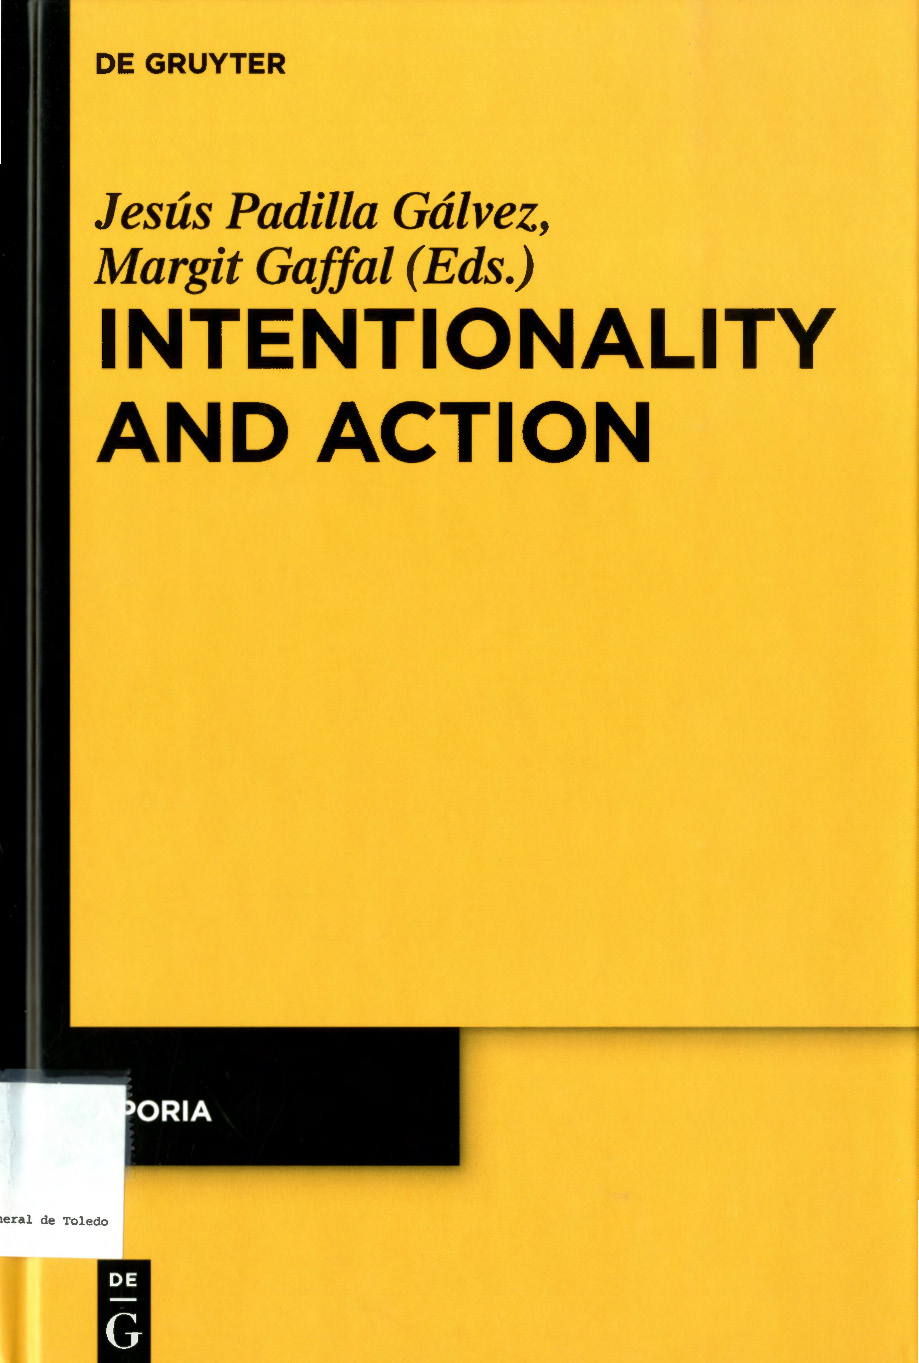 Imagen de portada del libro lntentionality and Action